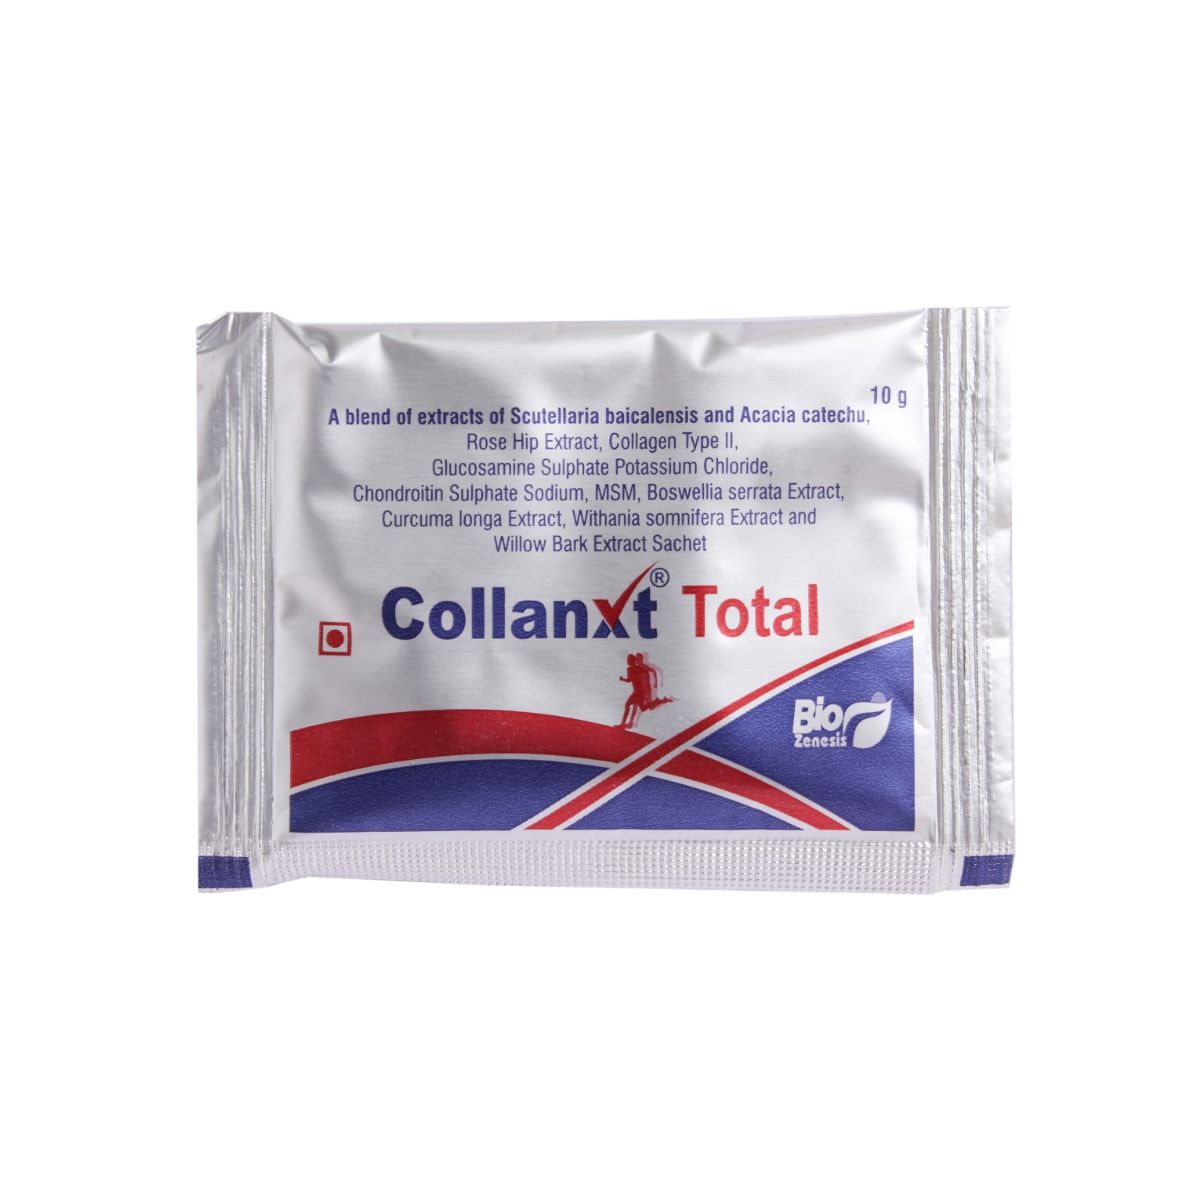 Collanxt Total Sachet 10 gm, Pack of 1 